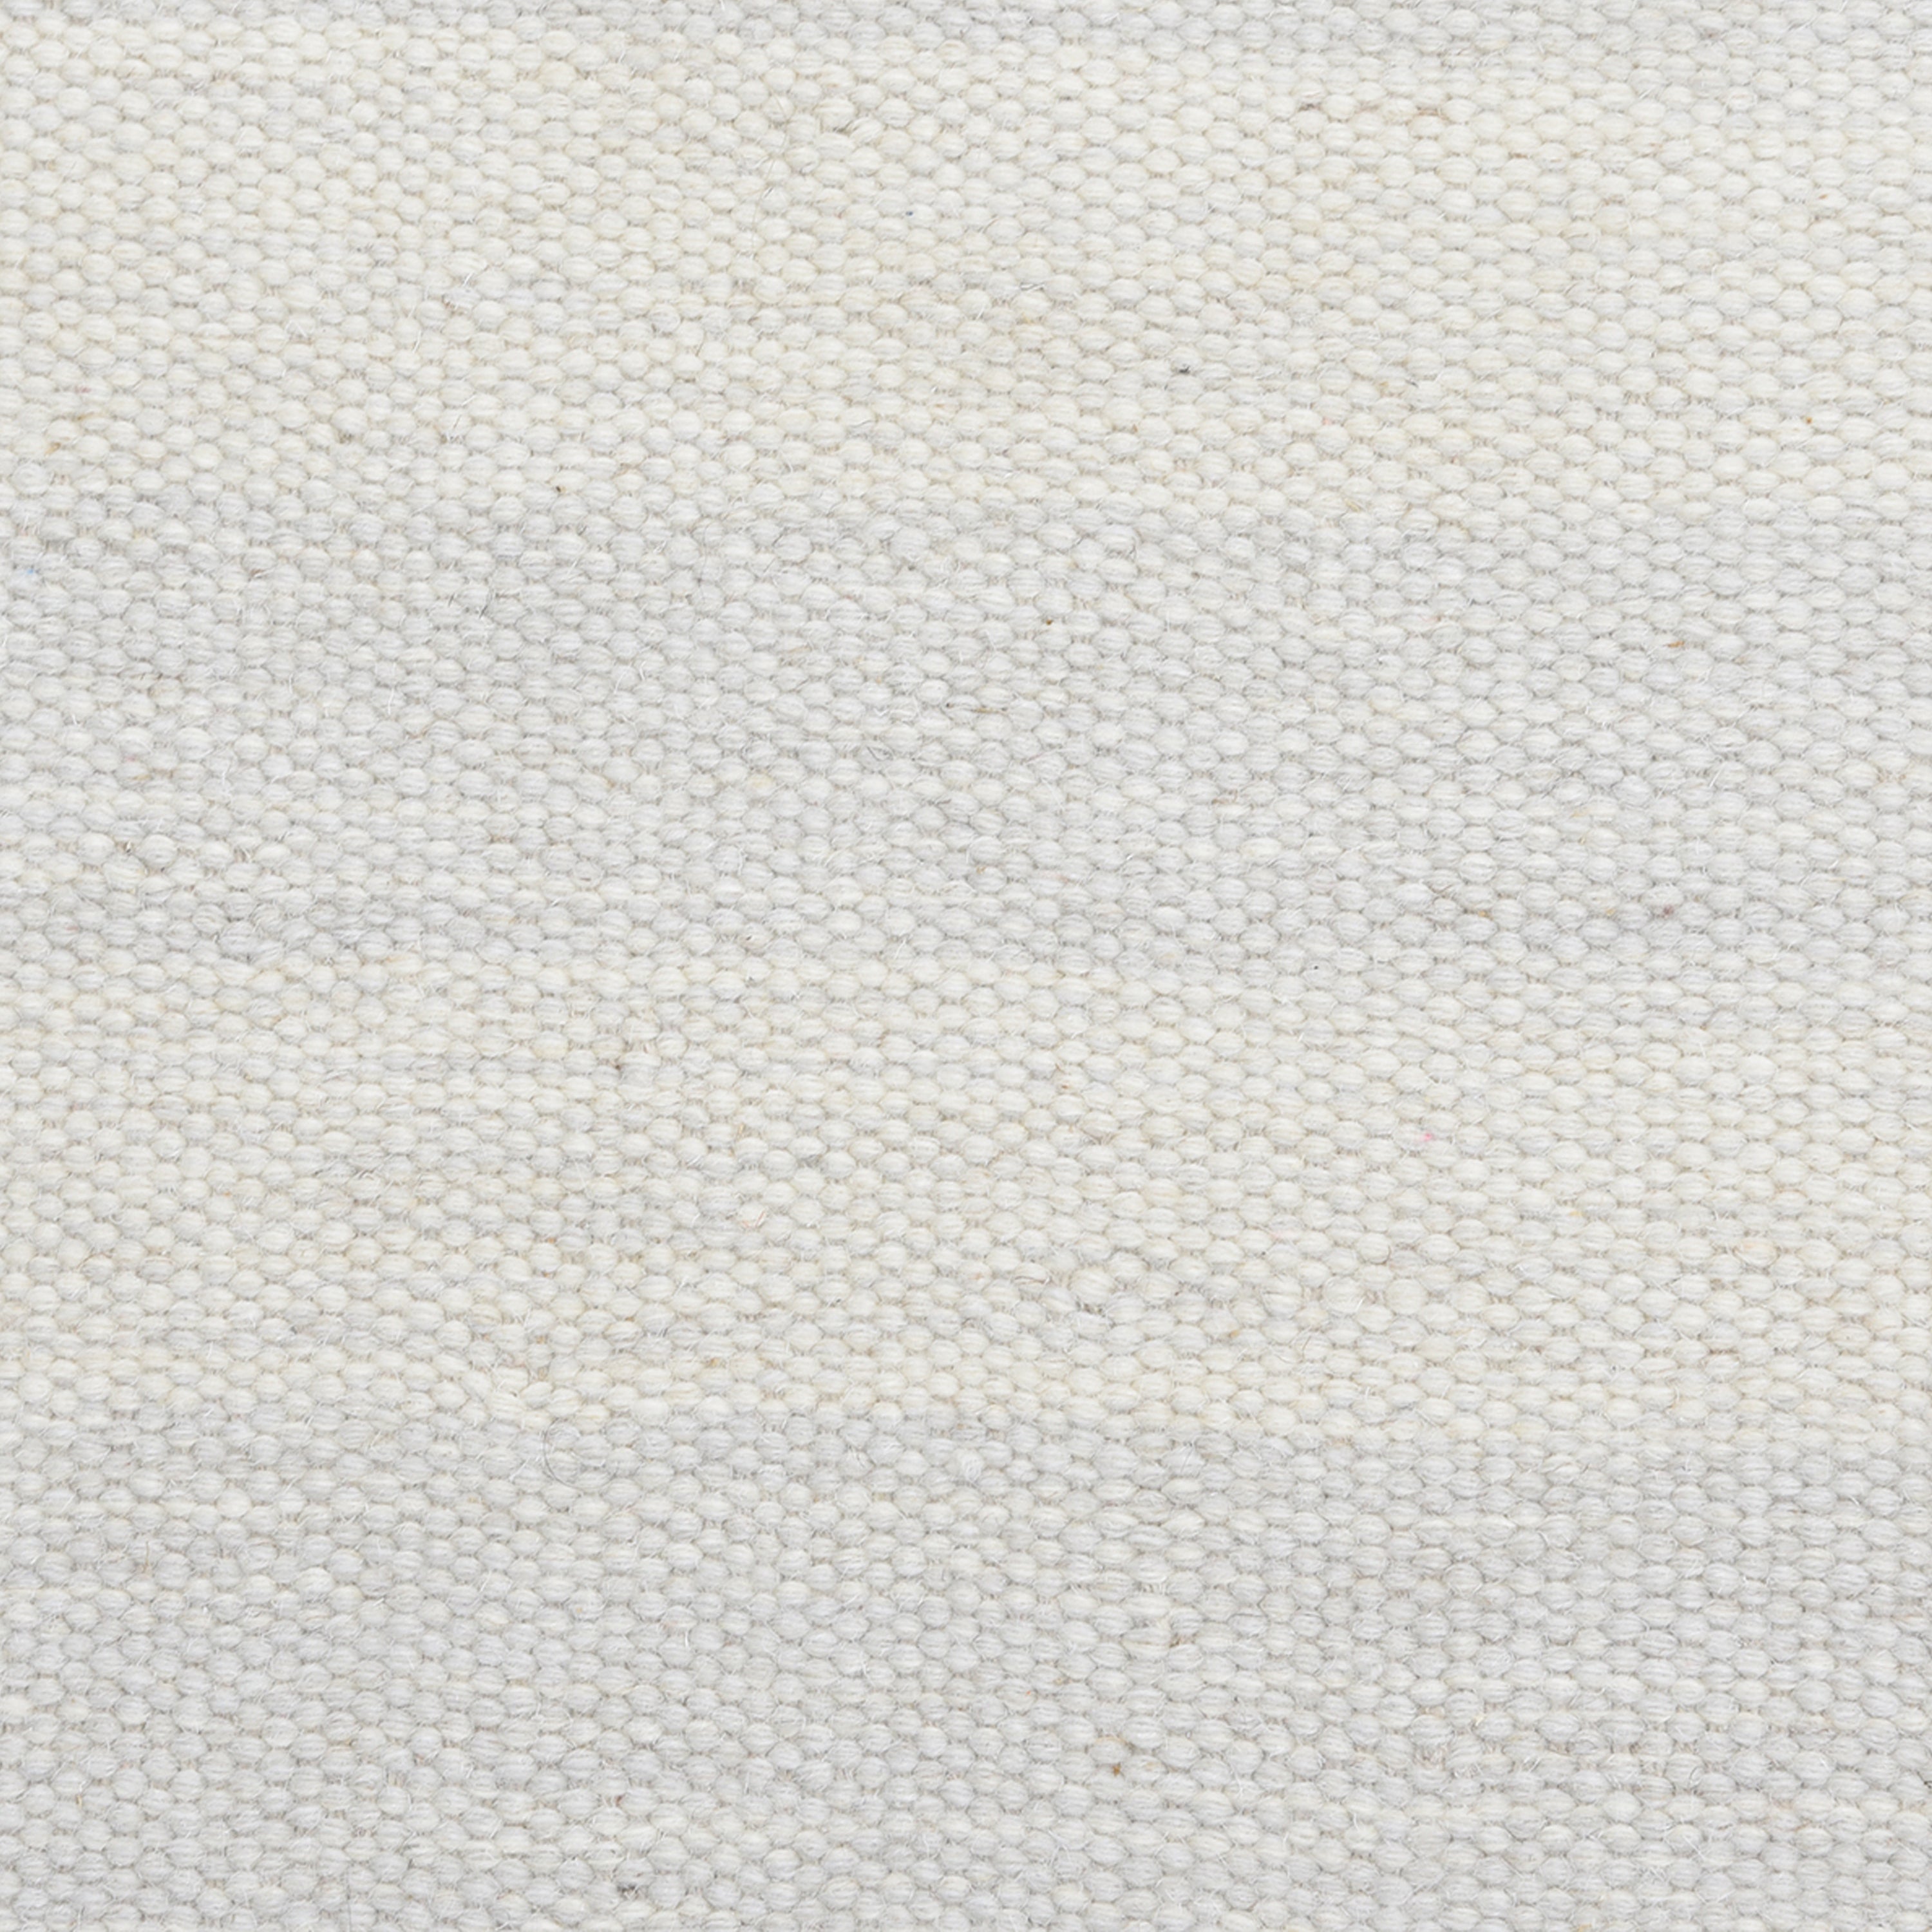 Ivory Flatweave Wool Cotton Blend Rug